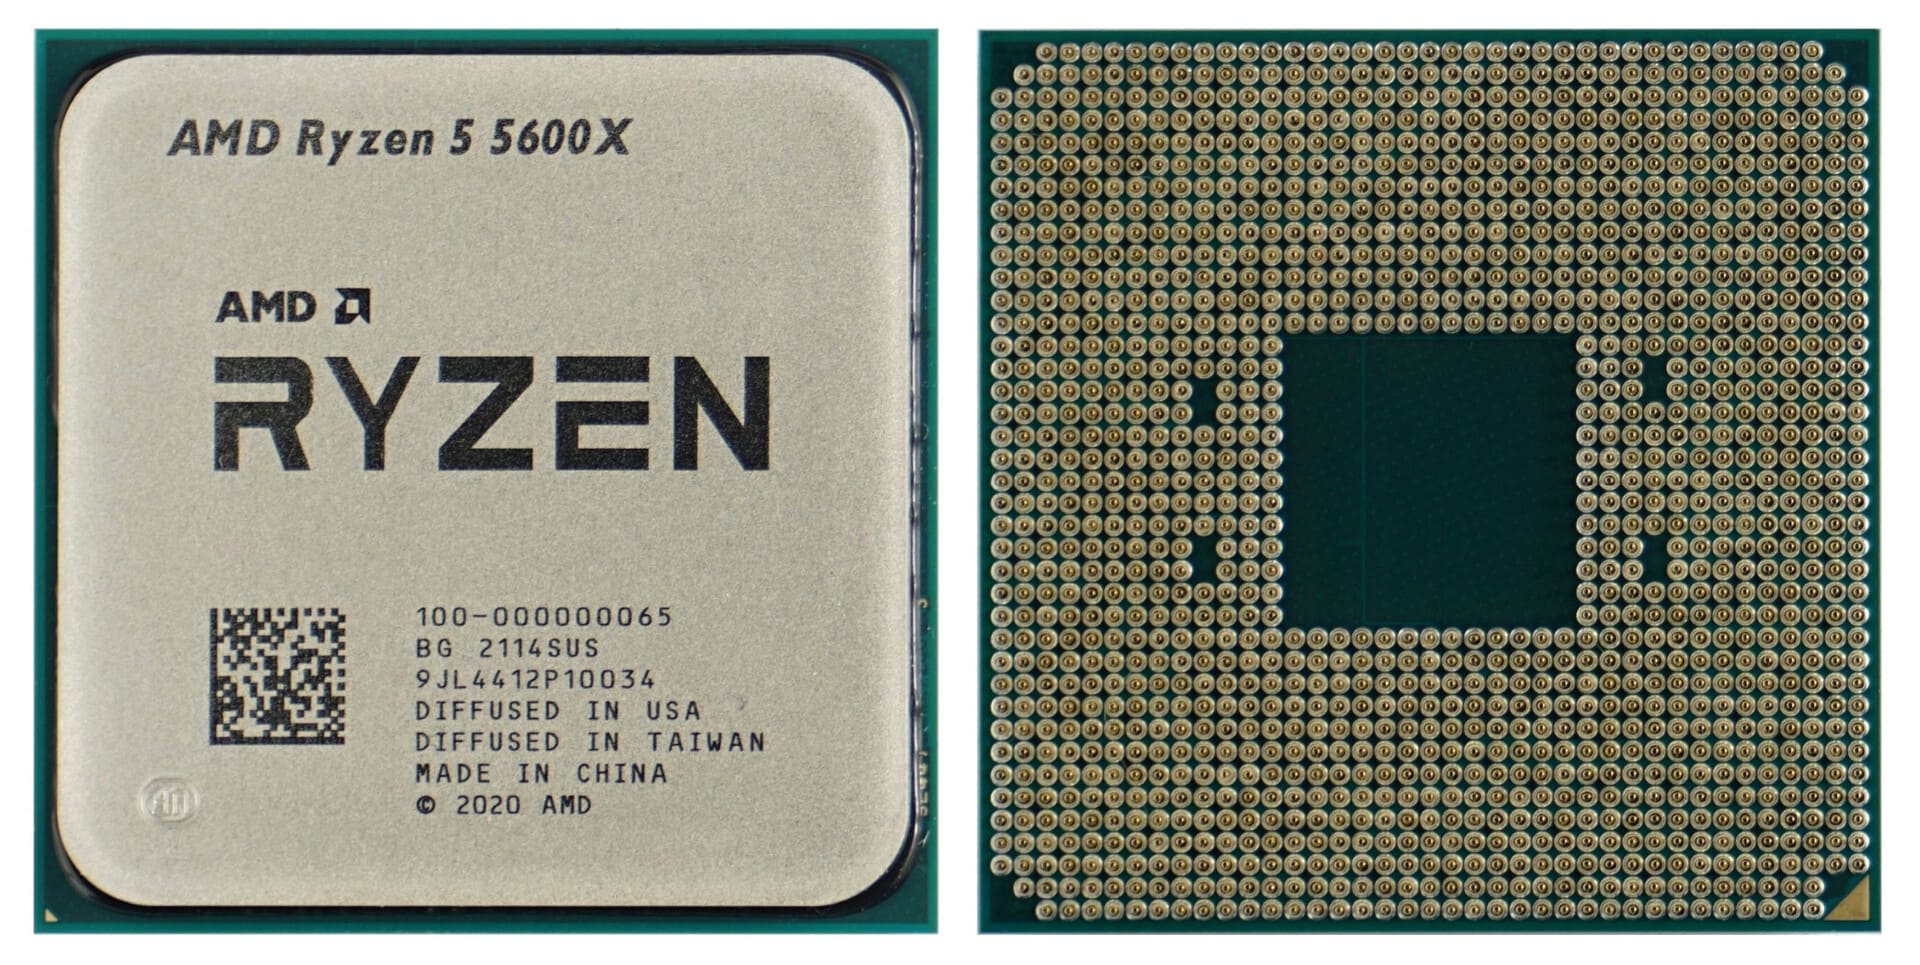 AMD Ryzen 5 5600X Processor design